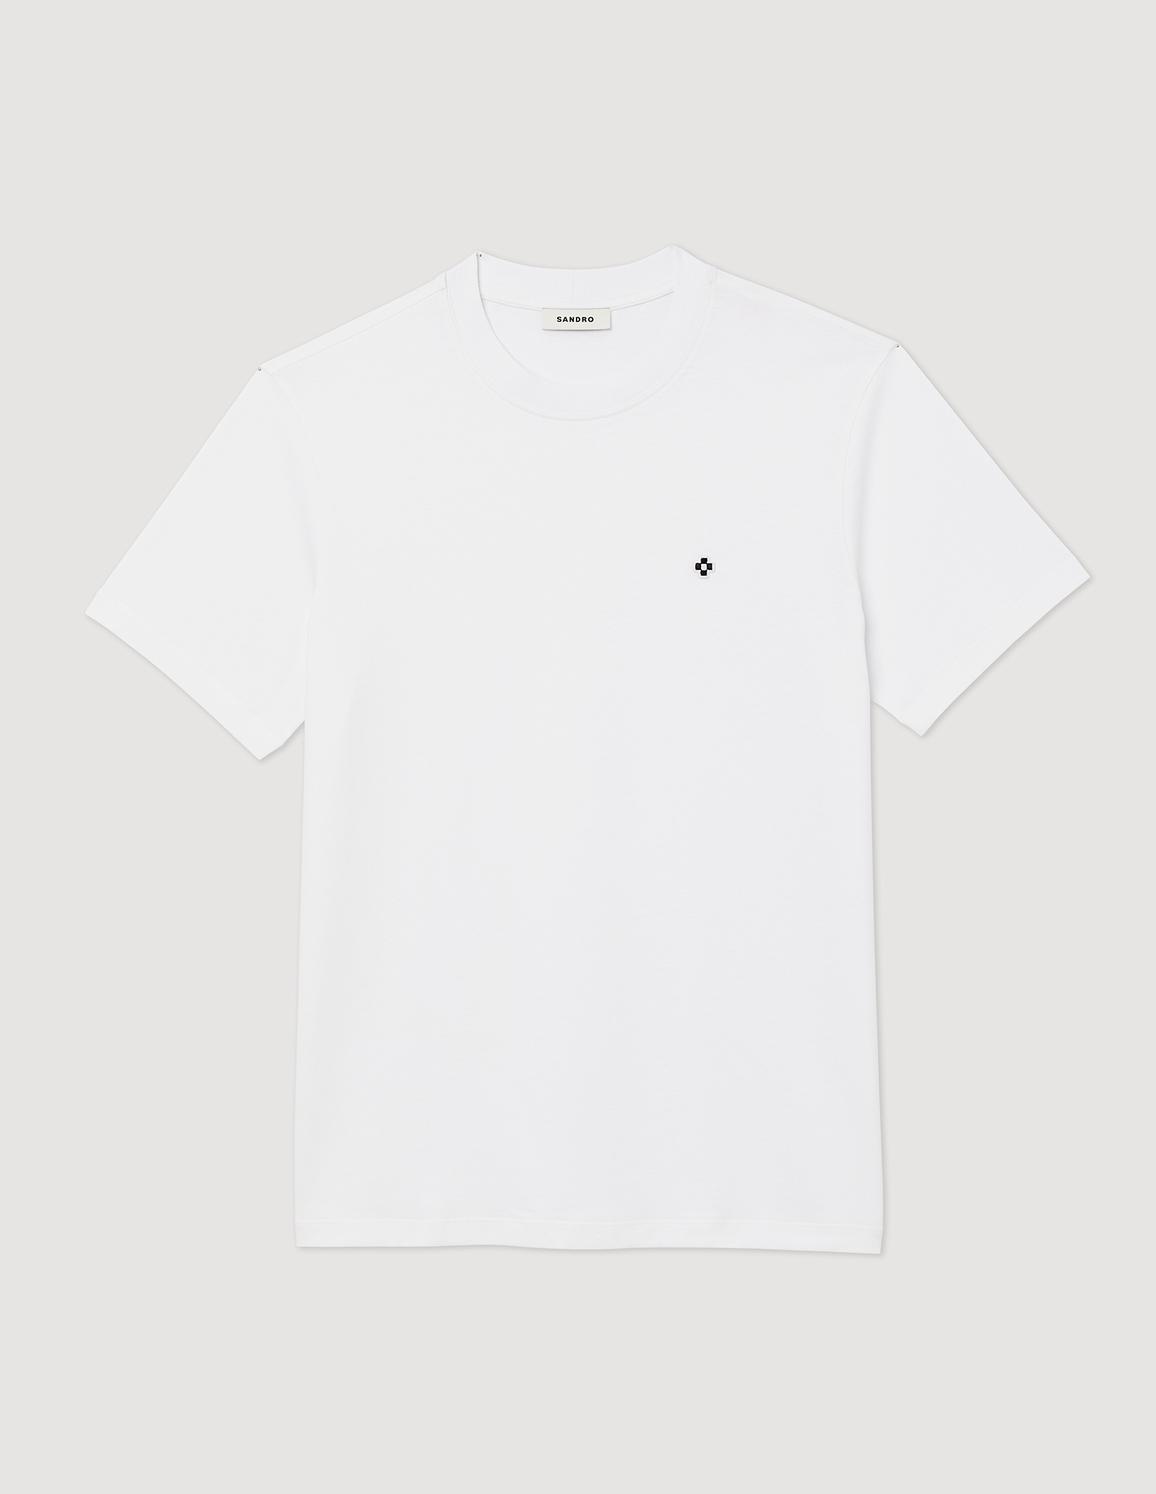 Kare İkonlu Beyaz T-shirt